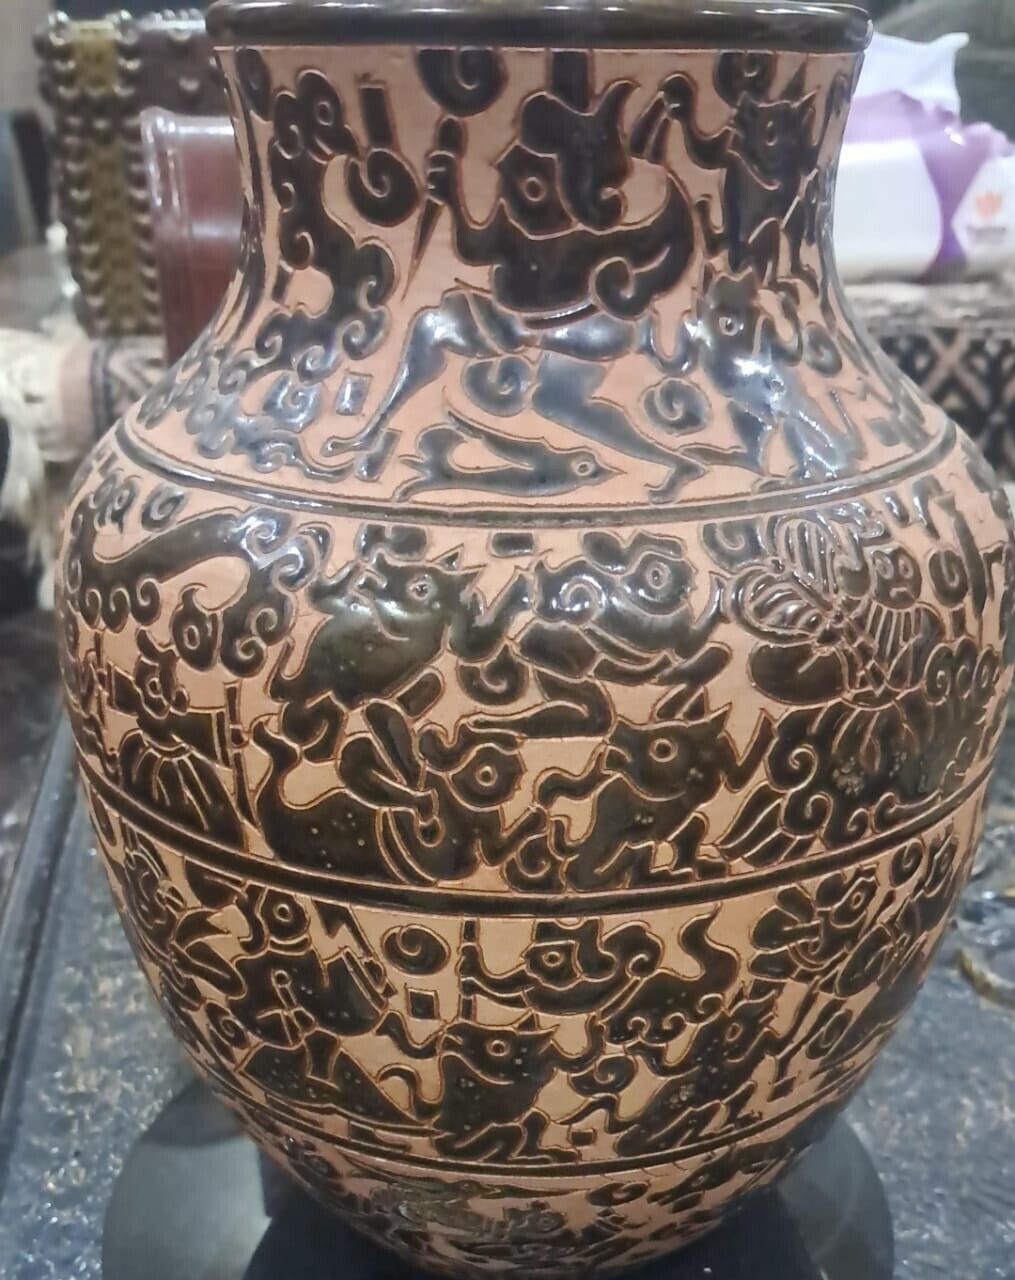 Antique Hand-Painted Iranian Vase - Exquisite Persian Art, Unique Collectible